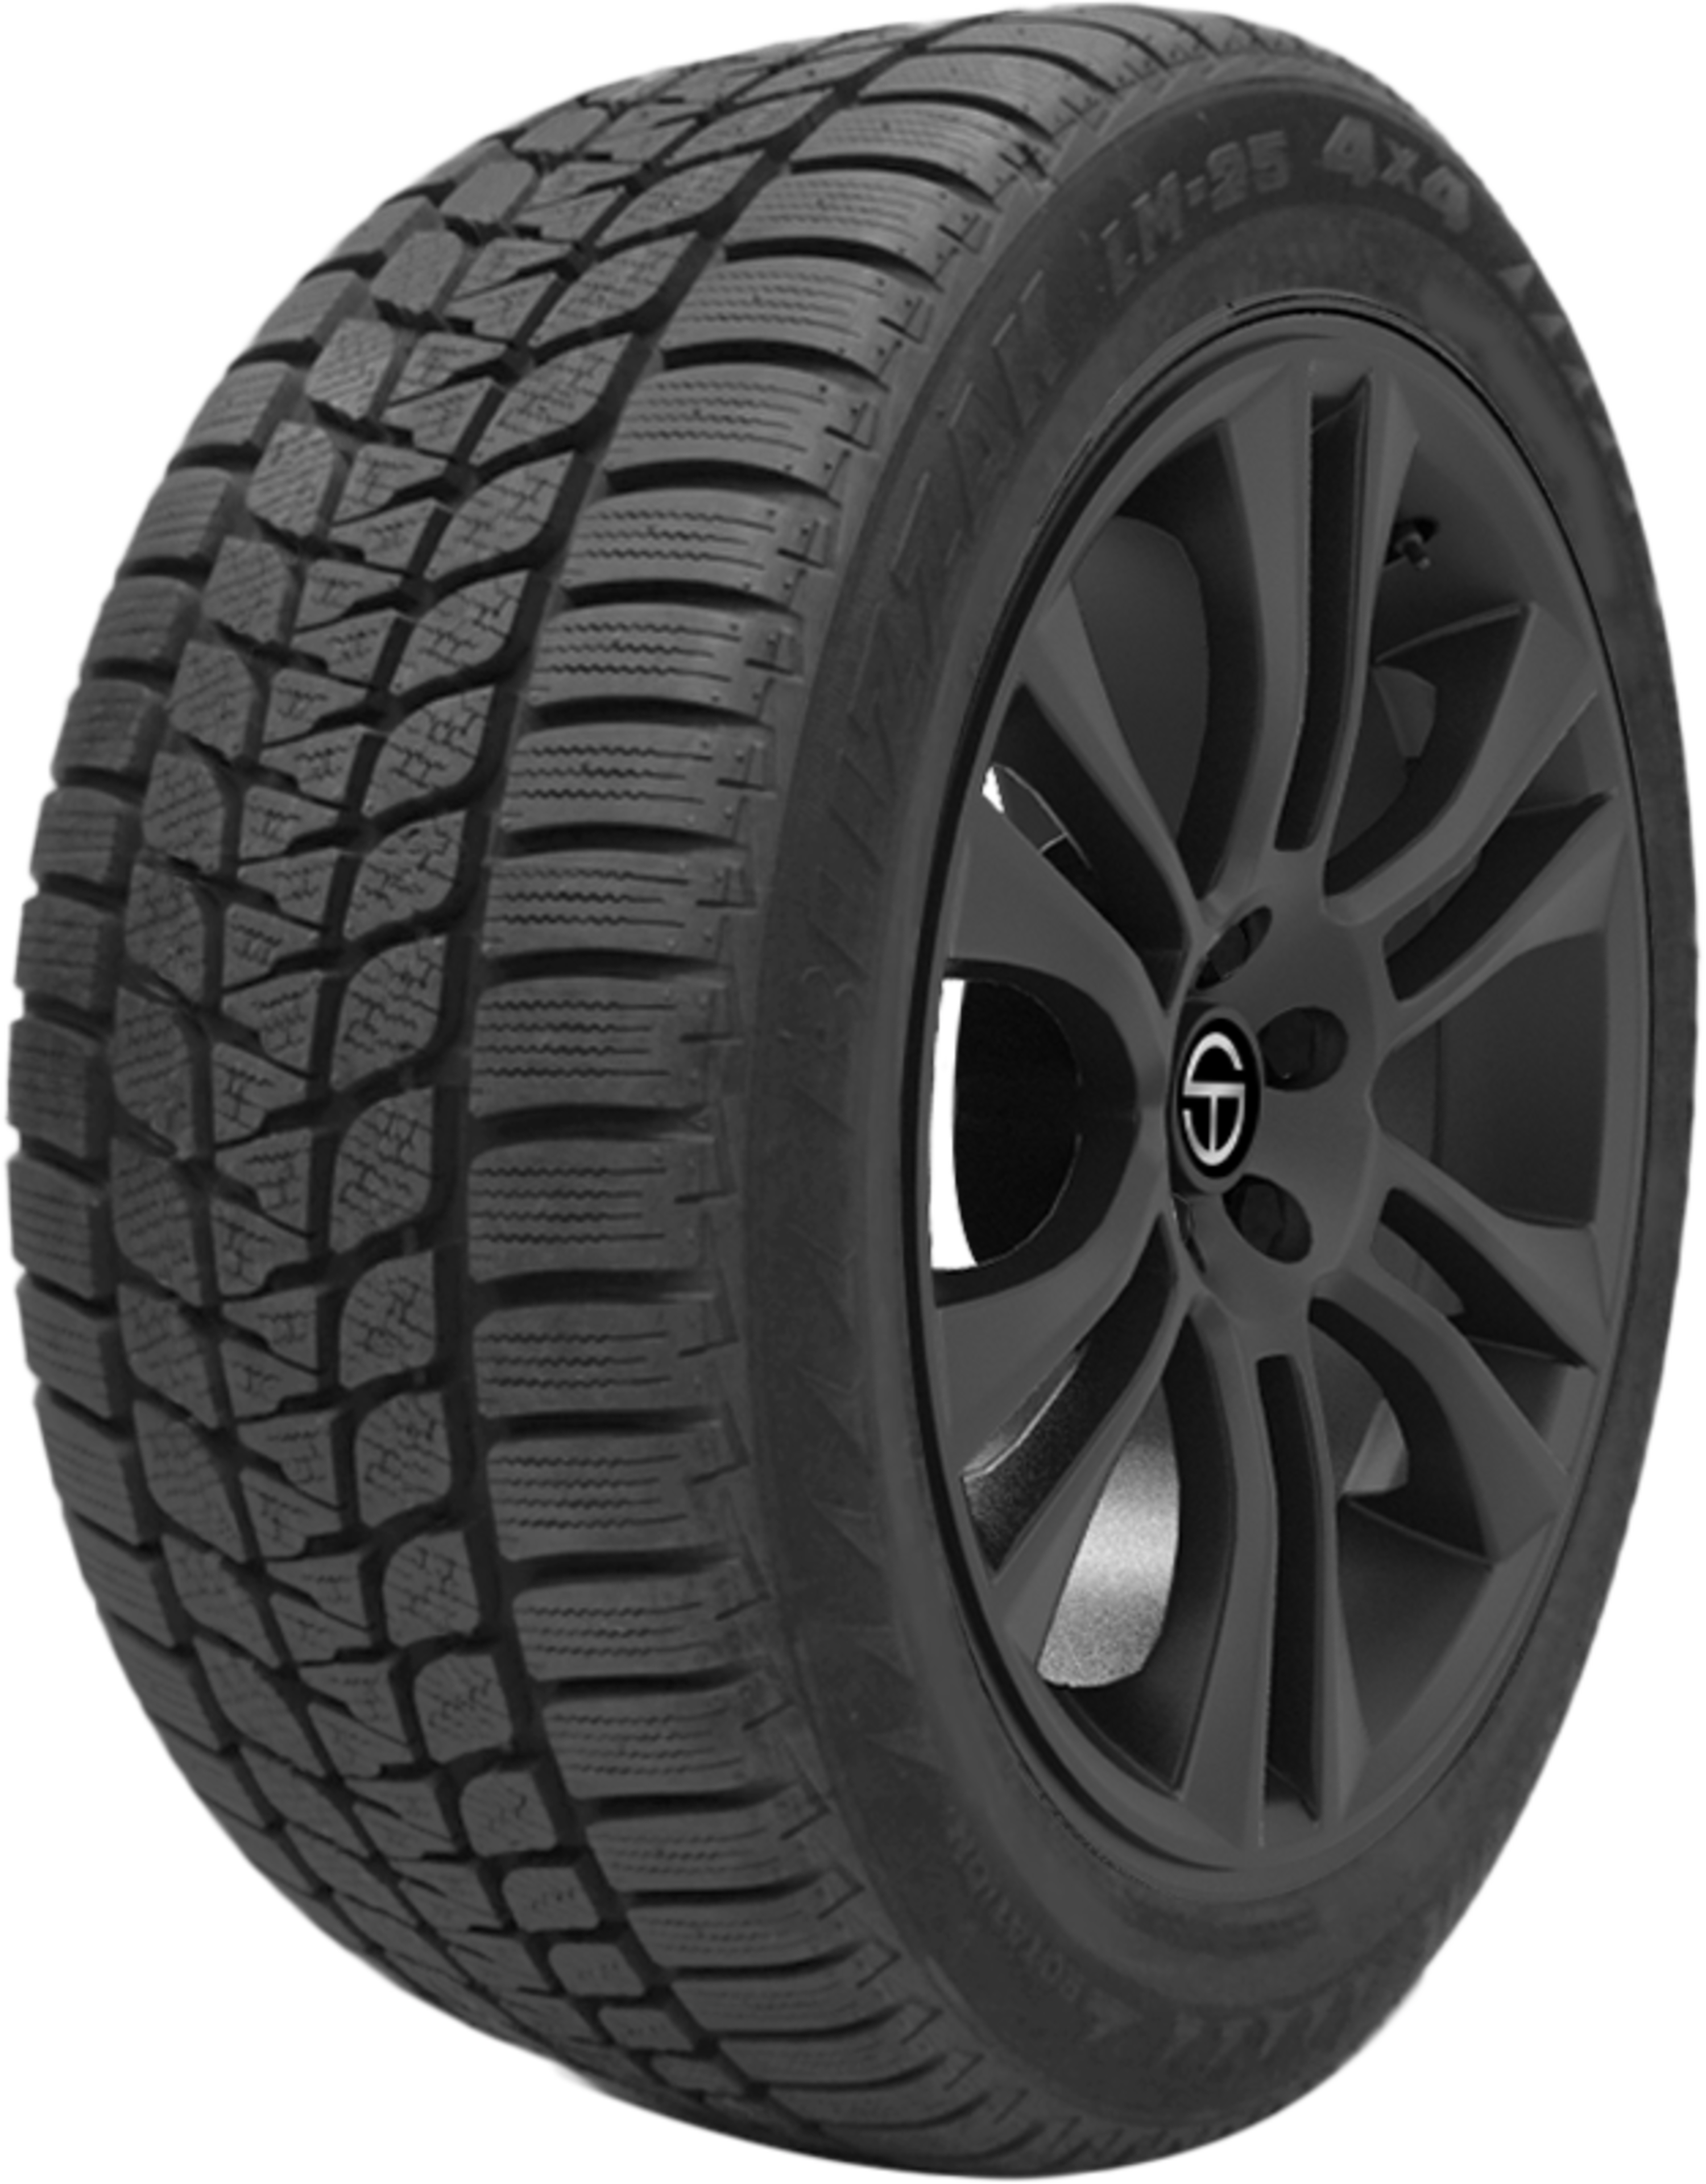 Buy Bridgestone | SimpleTire MOE Tires Online LM-25 Blizzak 4X4